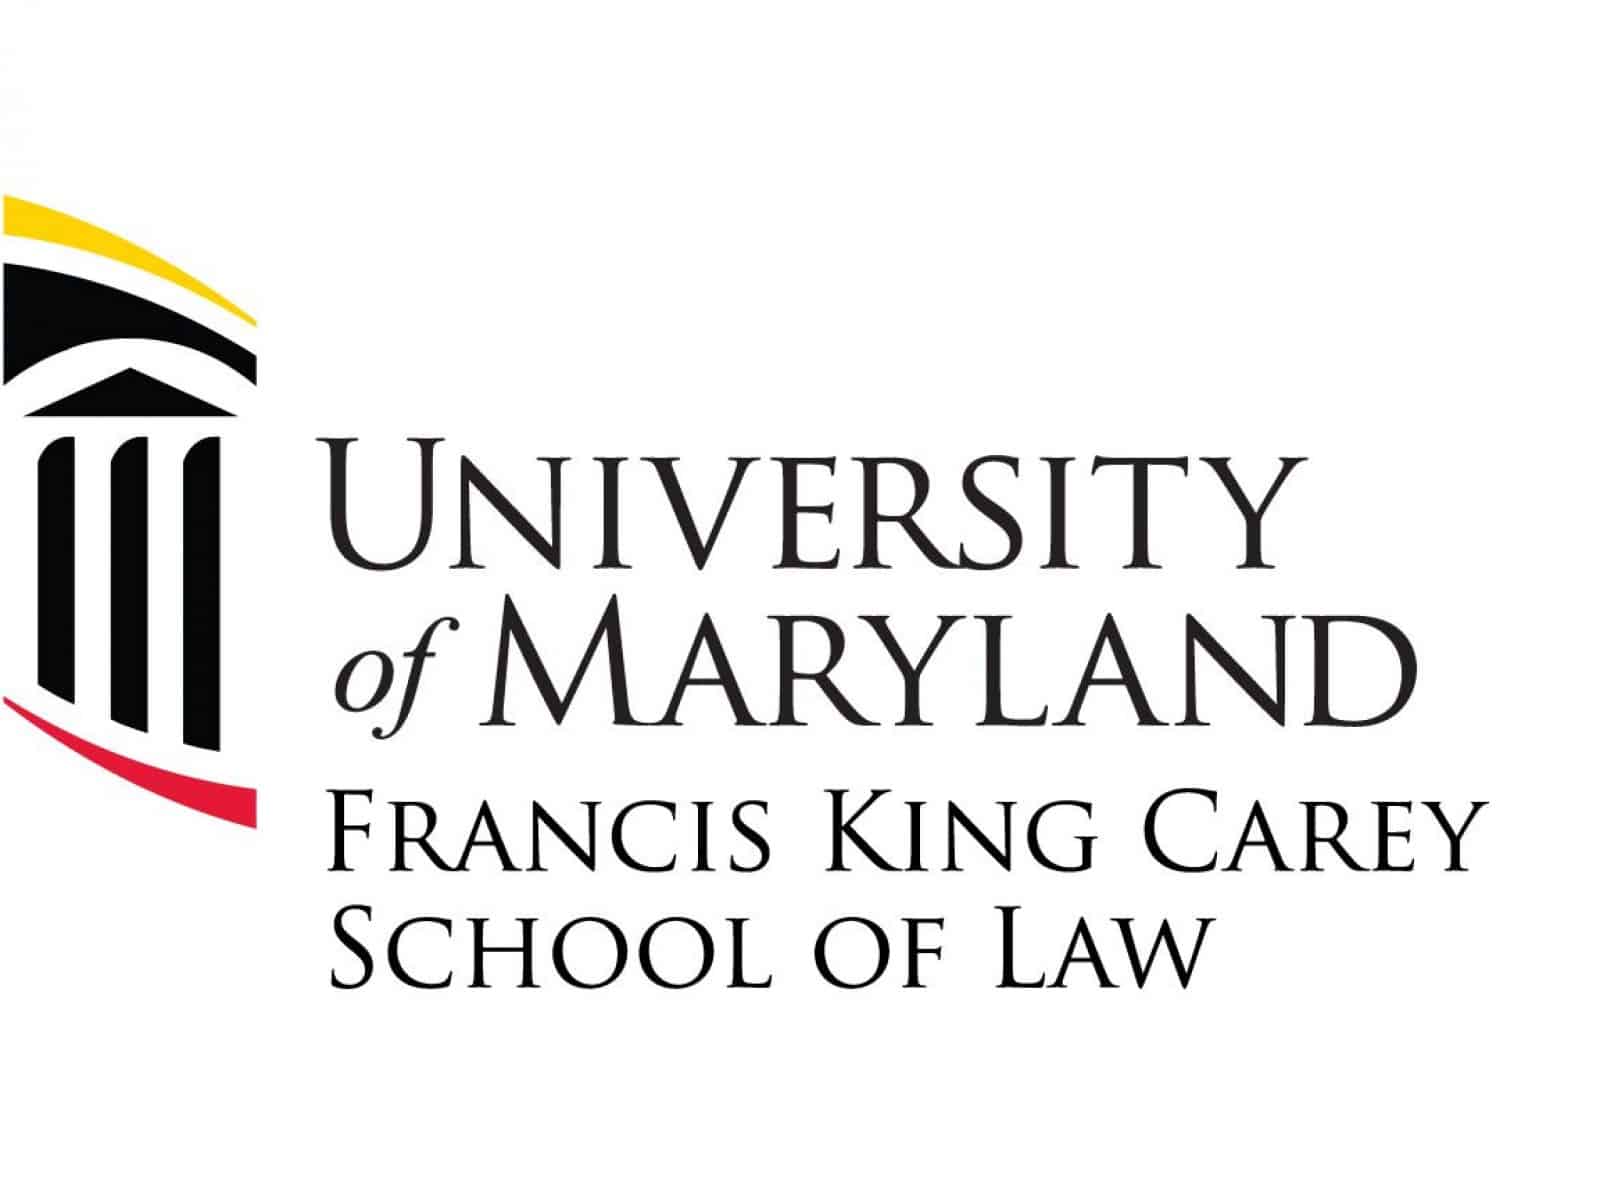 University of Maryland Francis King Carey School of Law